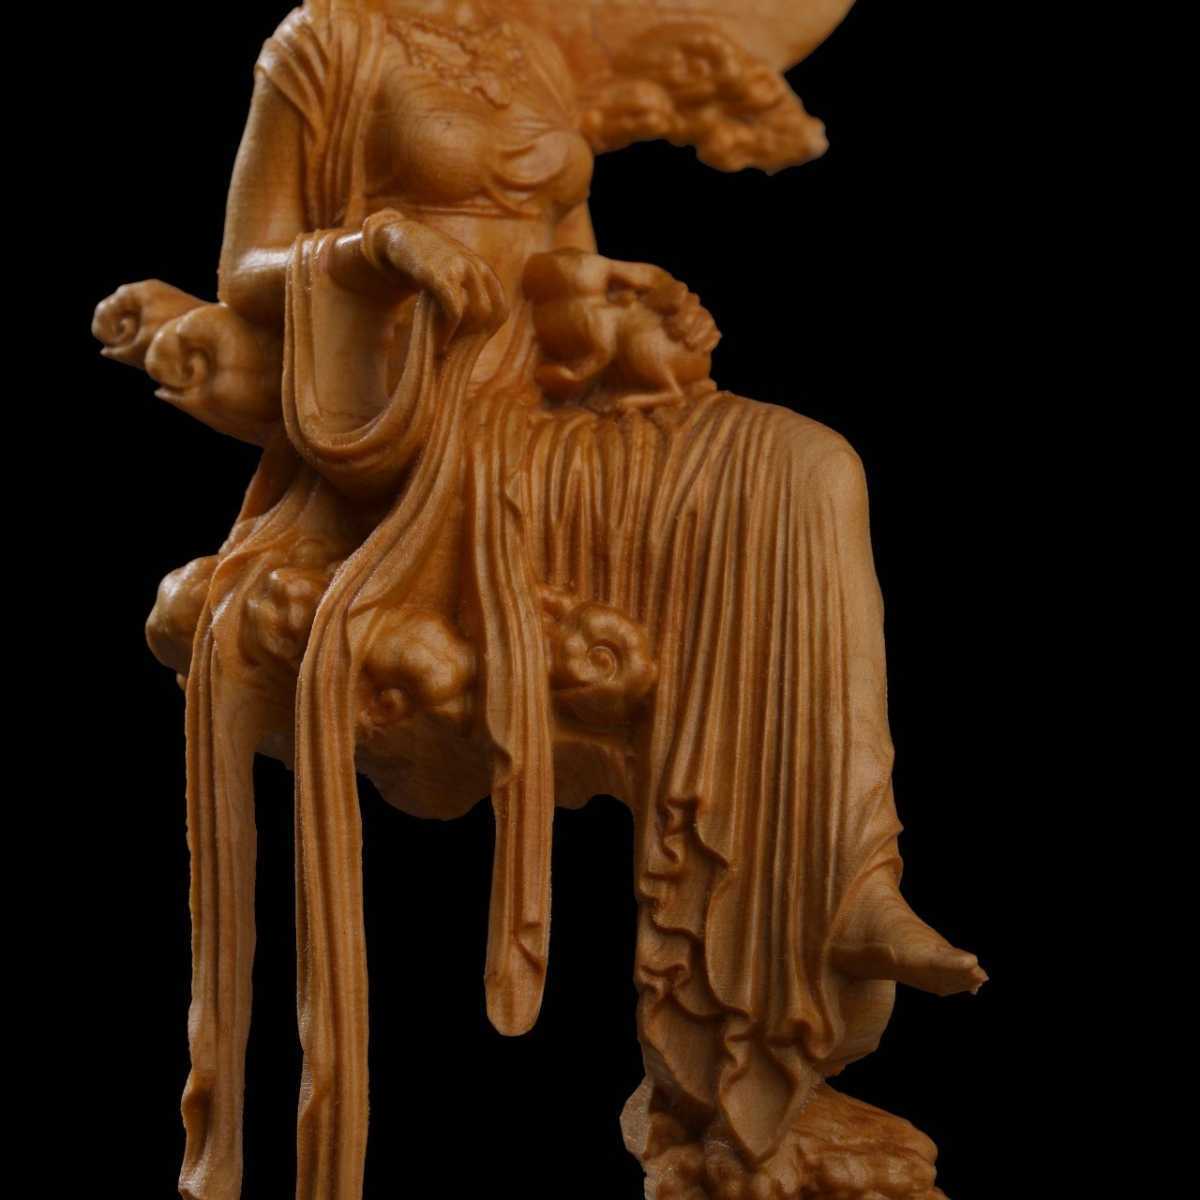 月の神 嫦娥 中秋 置物 木彫り 天女像 中国神話人物 手作り 美術品